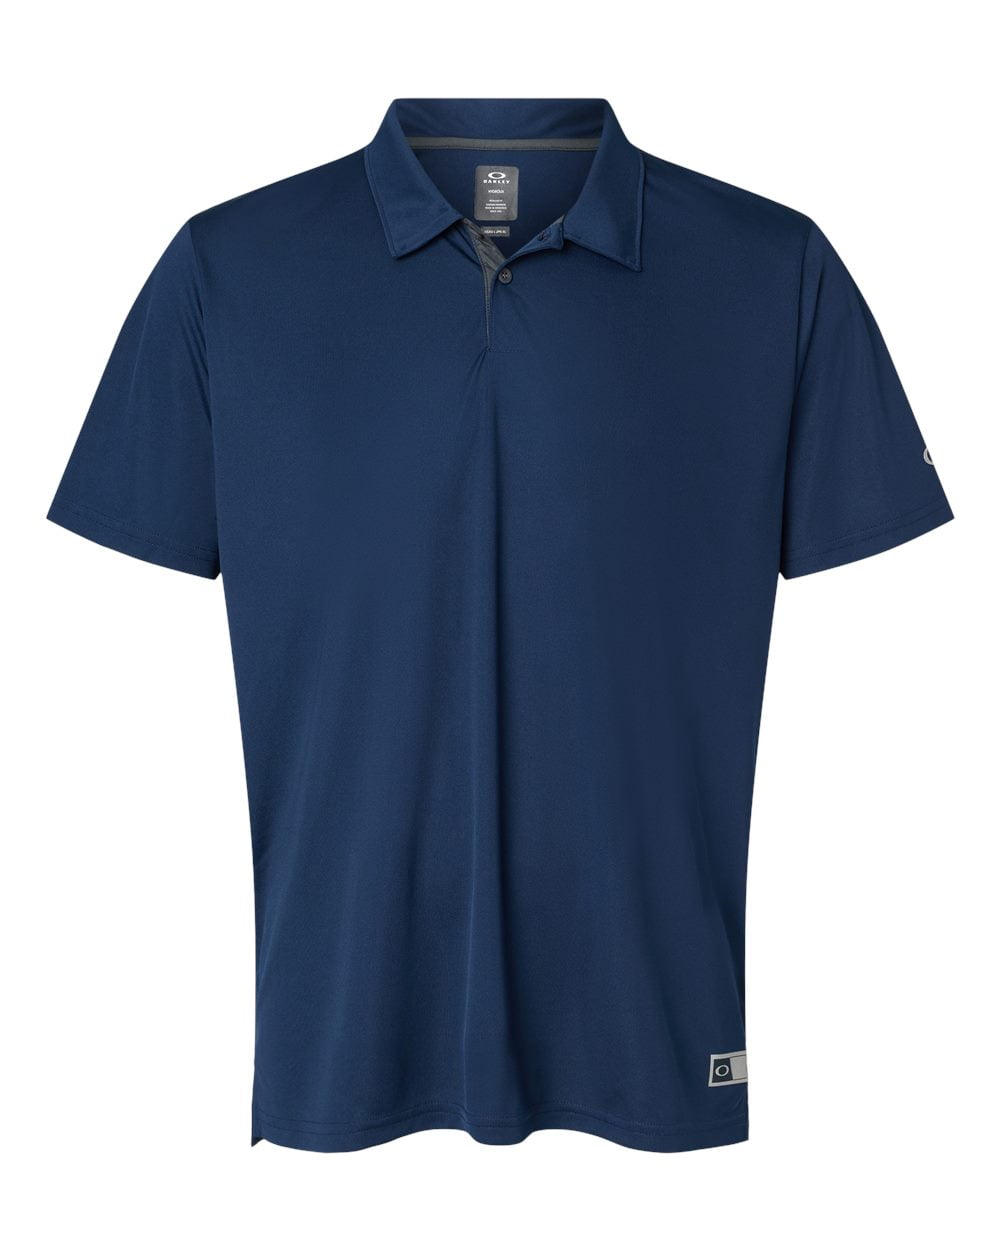 Camiseta Oakley Premium Quality Tee Navy Blue - l Surftrip l